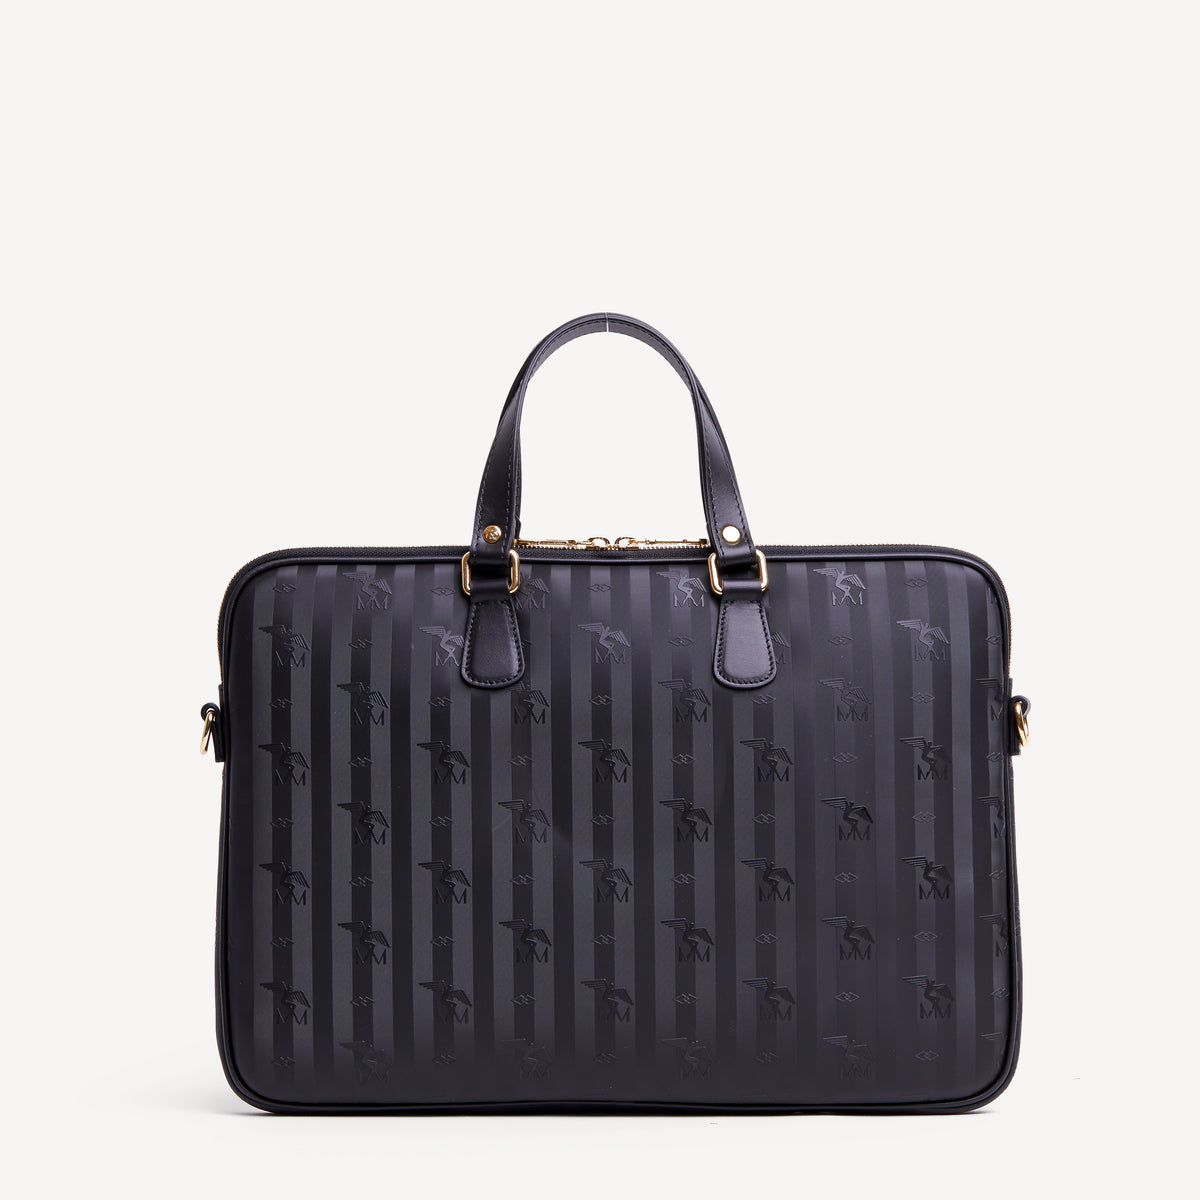 Louis Vuitton Laptoptasche in Grau